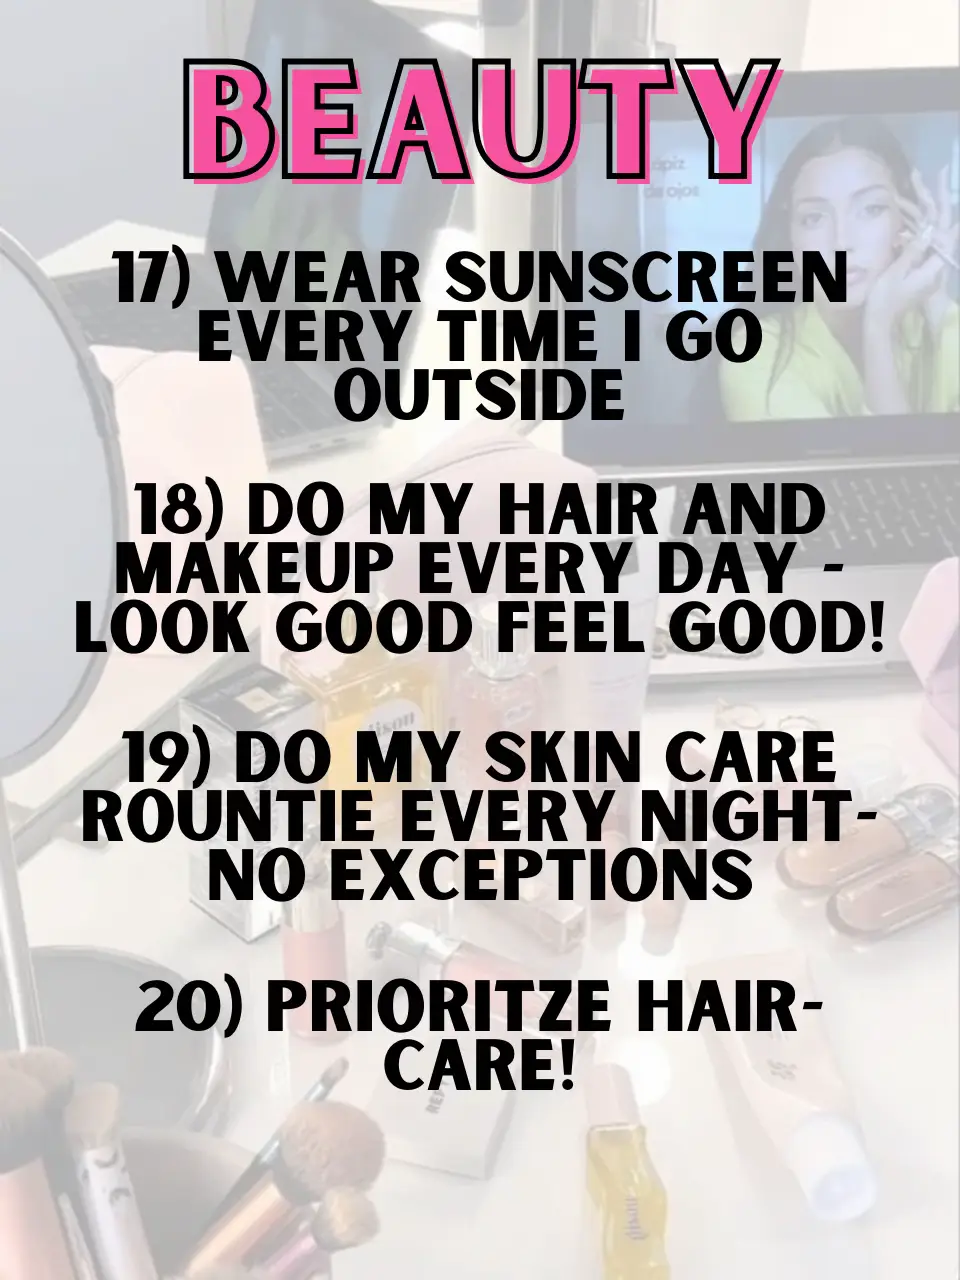  A list of beauty tips